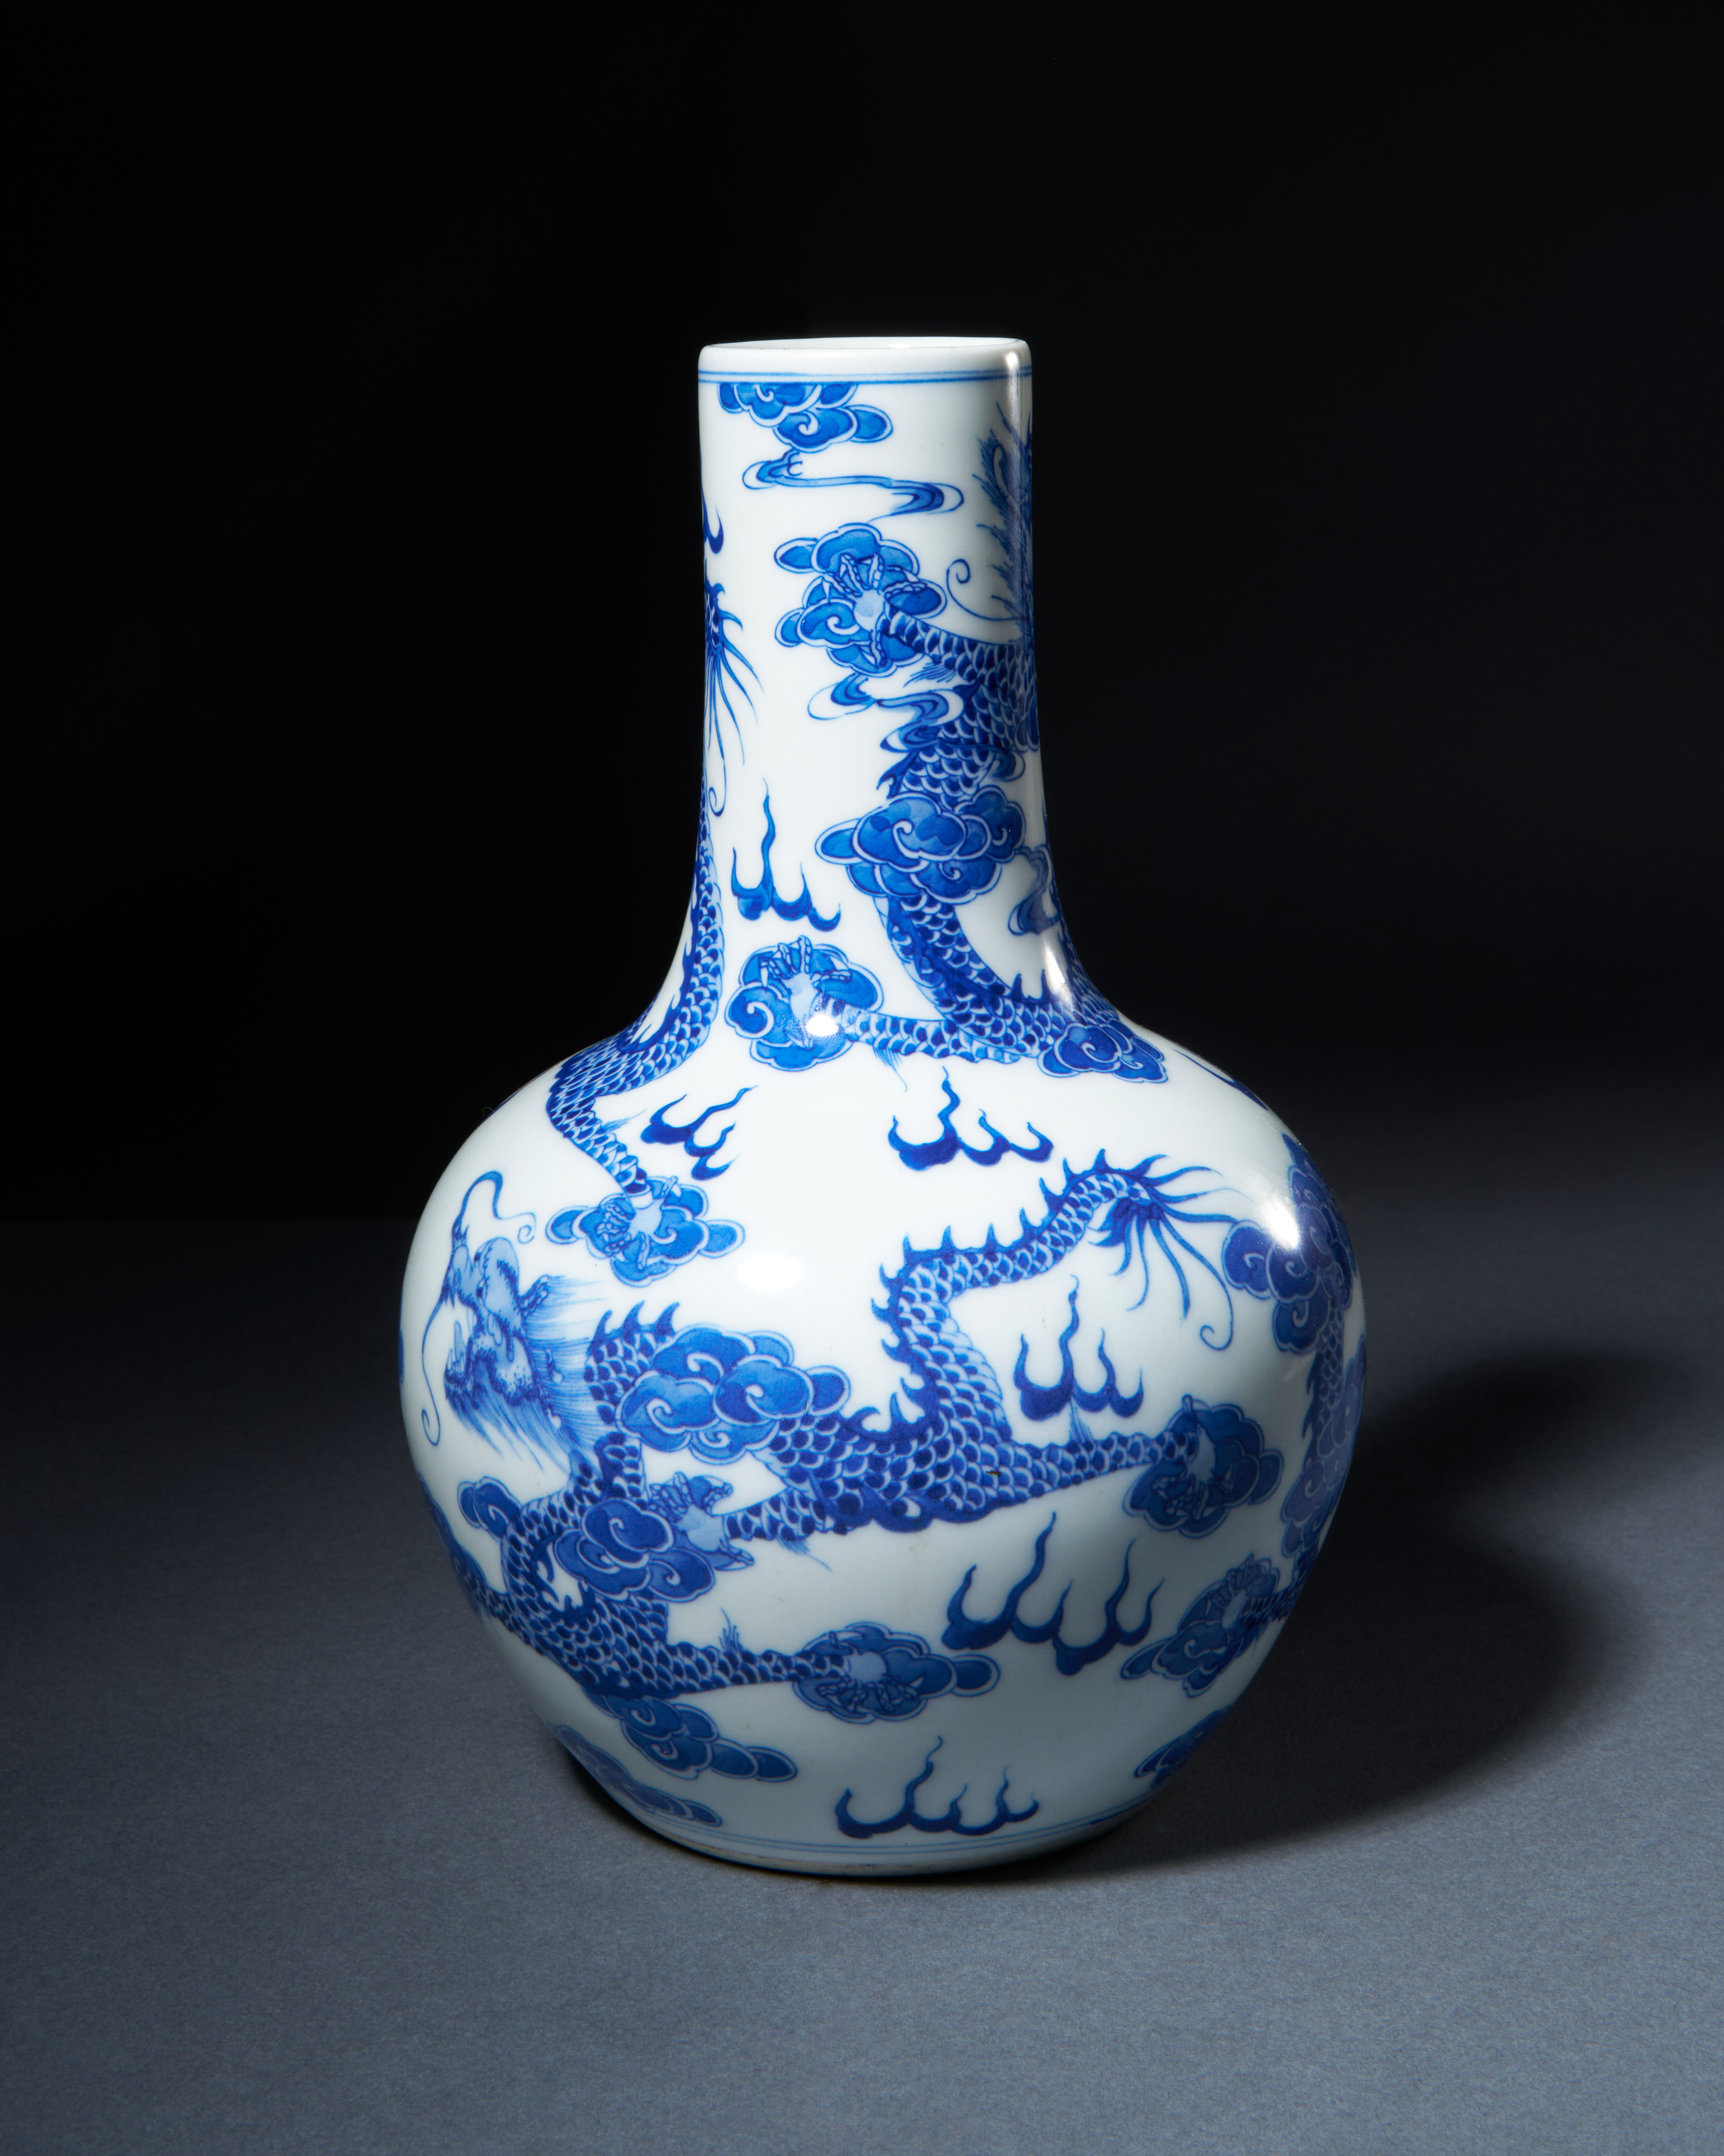 A CHINESE BLUE & WHITE BOTTLE VASE, QING DYNASTY (1644-1911) - Image 3 of 6